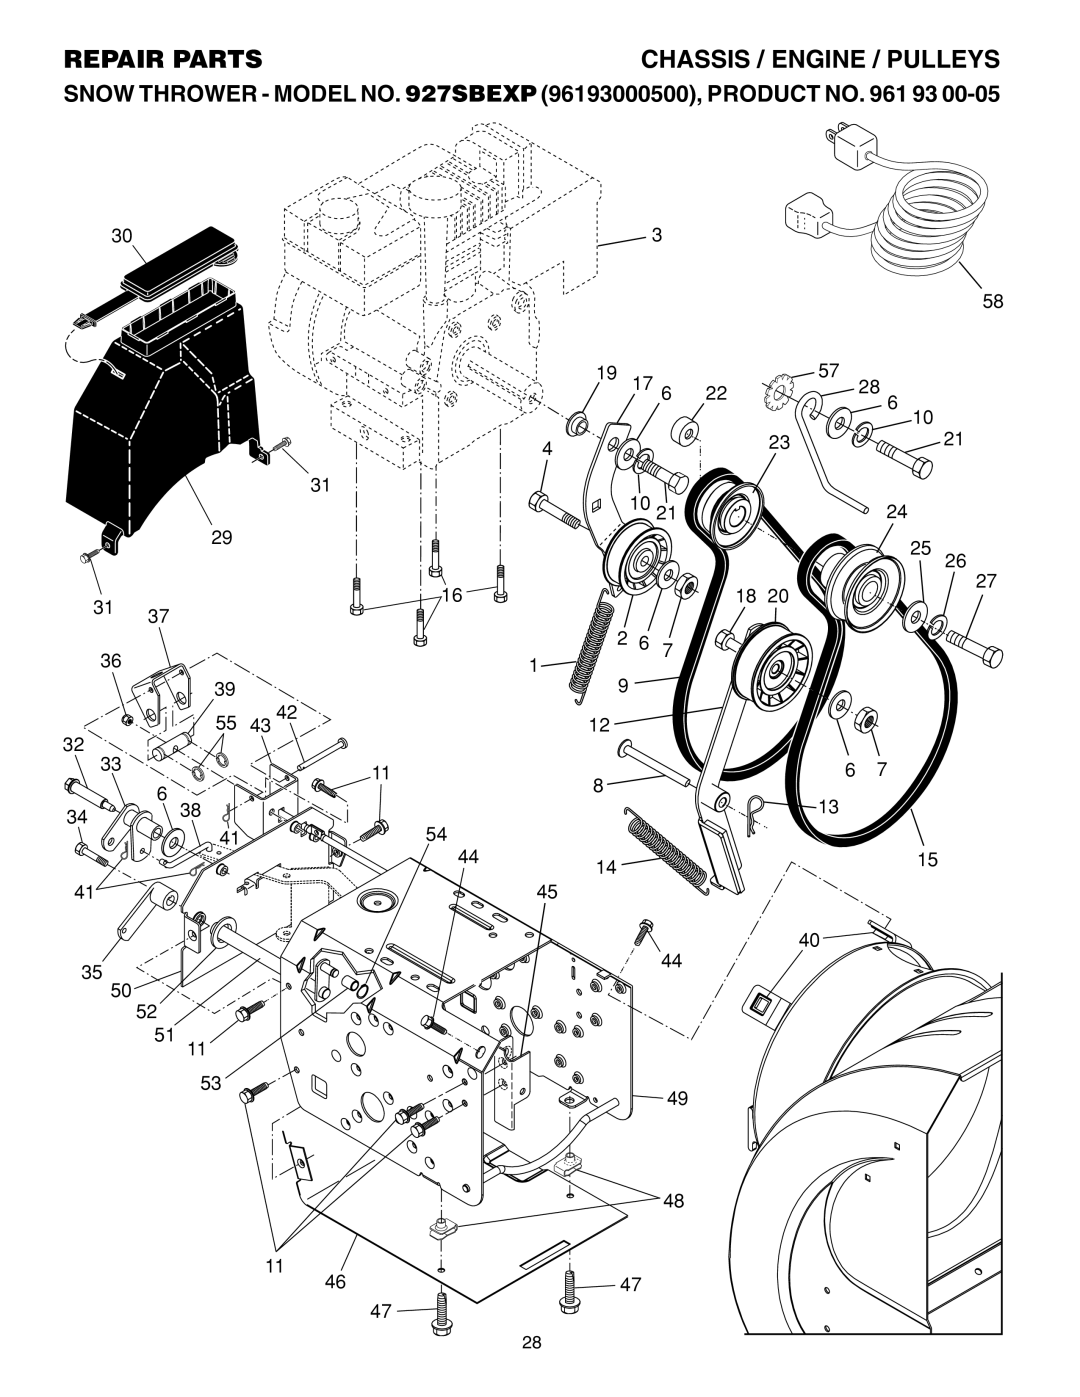 Husqvarna 927SBEXP owner manual Chassis / Engine / Pulleys, Repair Parts 